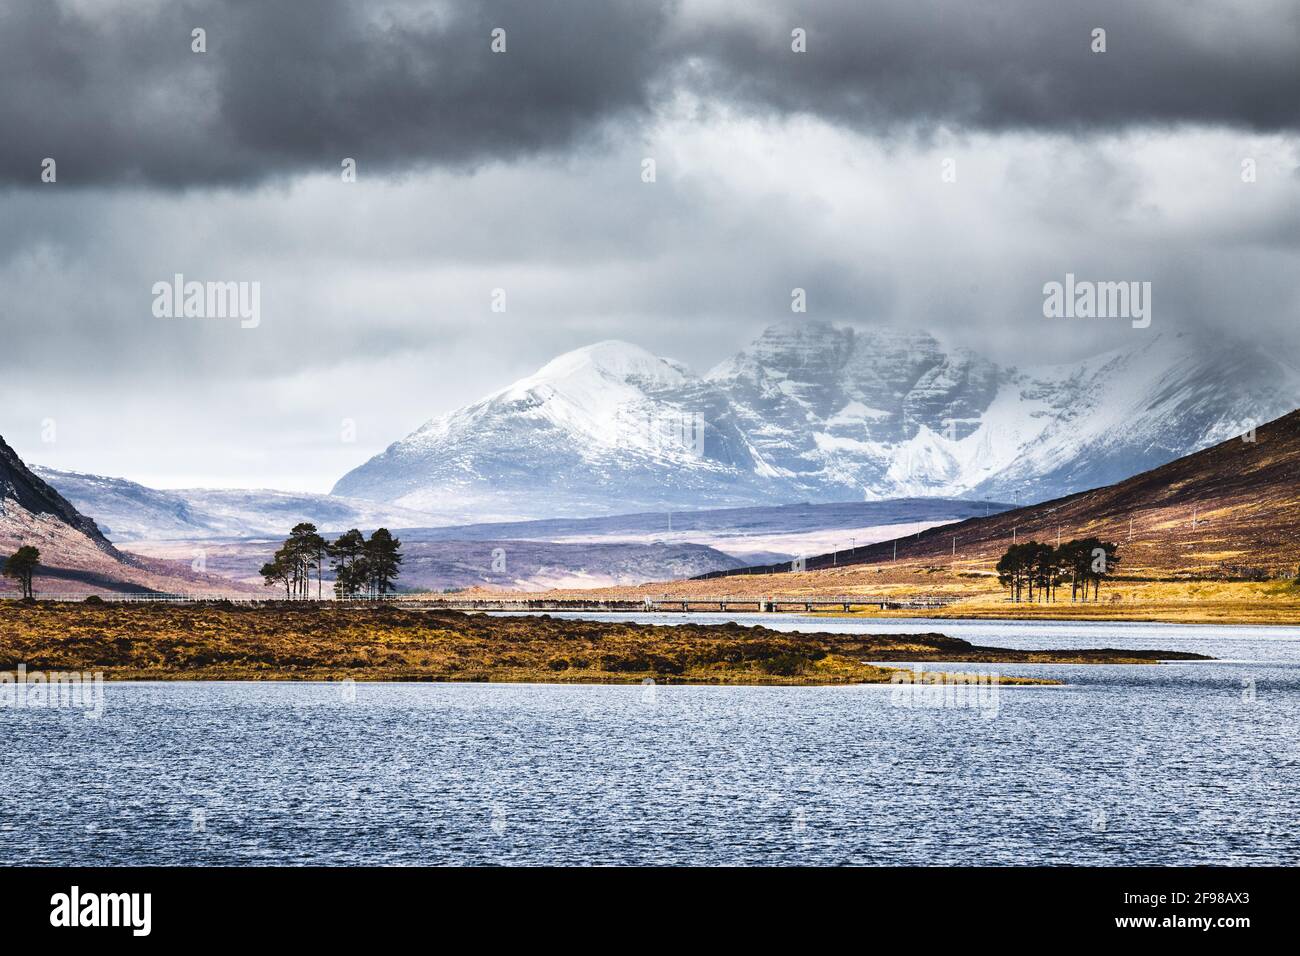 Scotland, highlands, lake, snow-capped mountains, Stock Photo